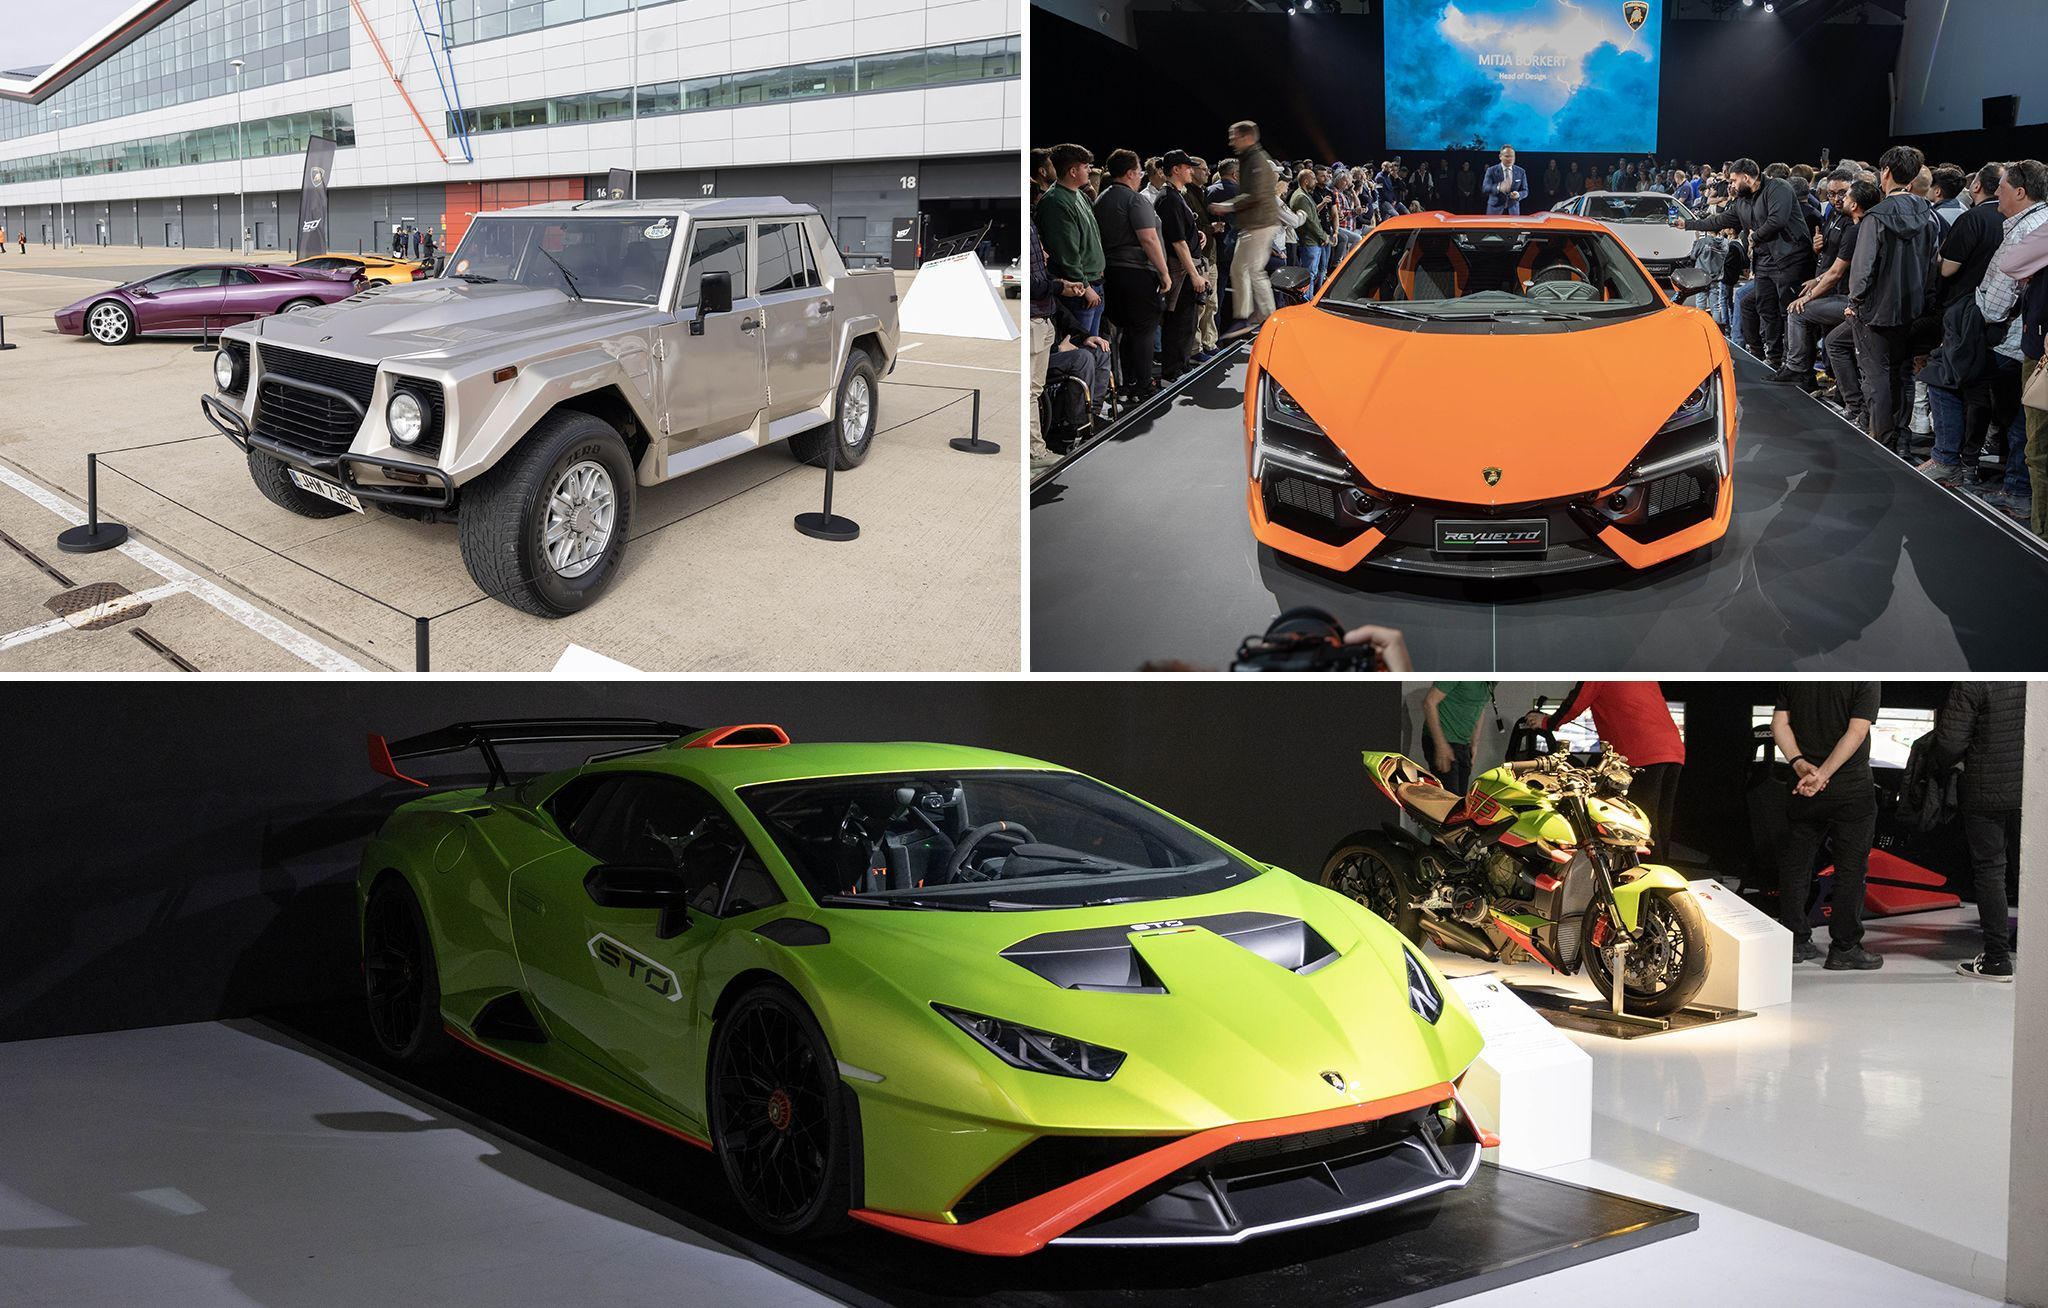 Automobili Lamborghini’s 60th anniversary celebrated at Lamborghini Day UK